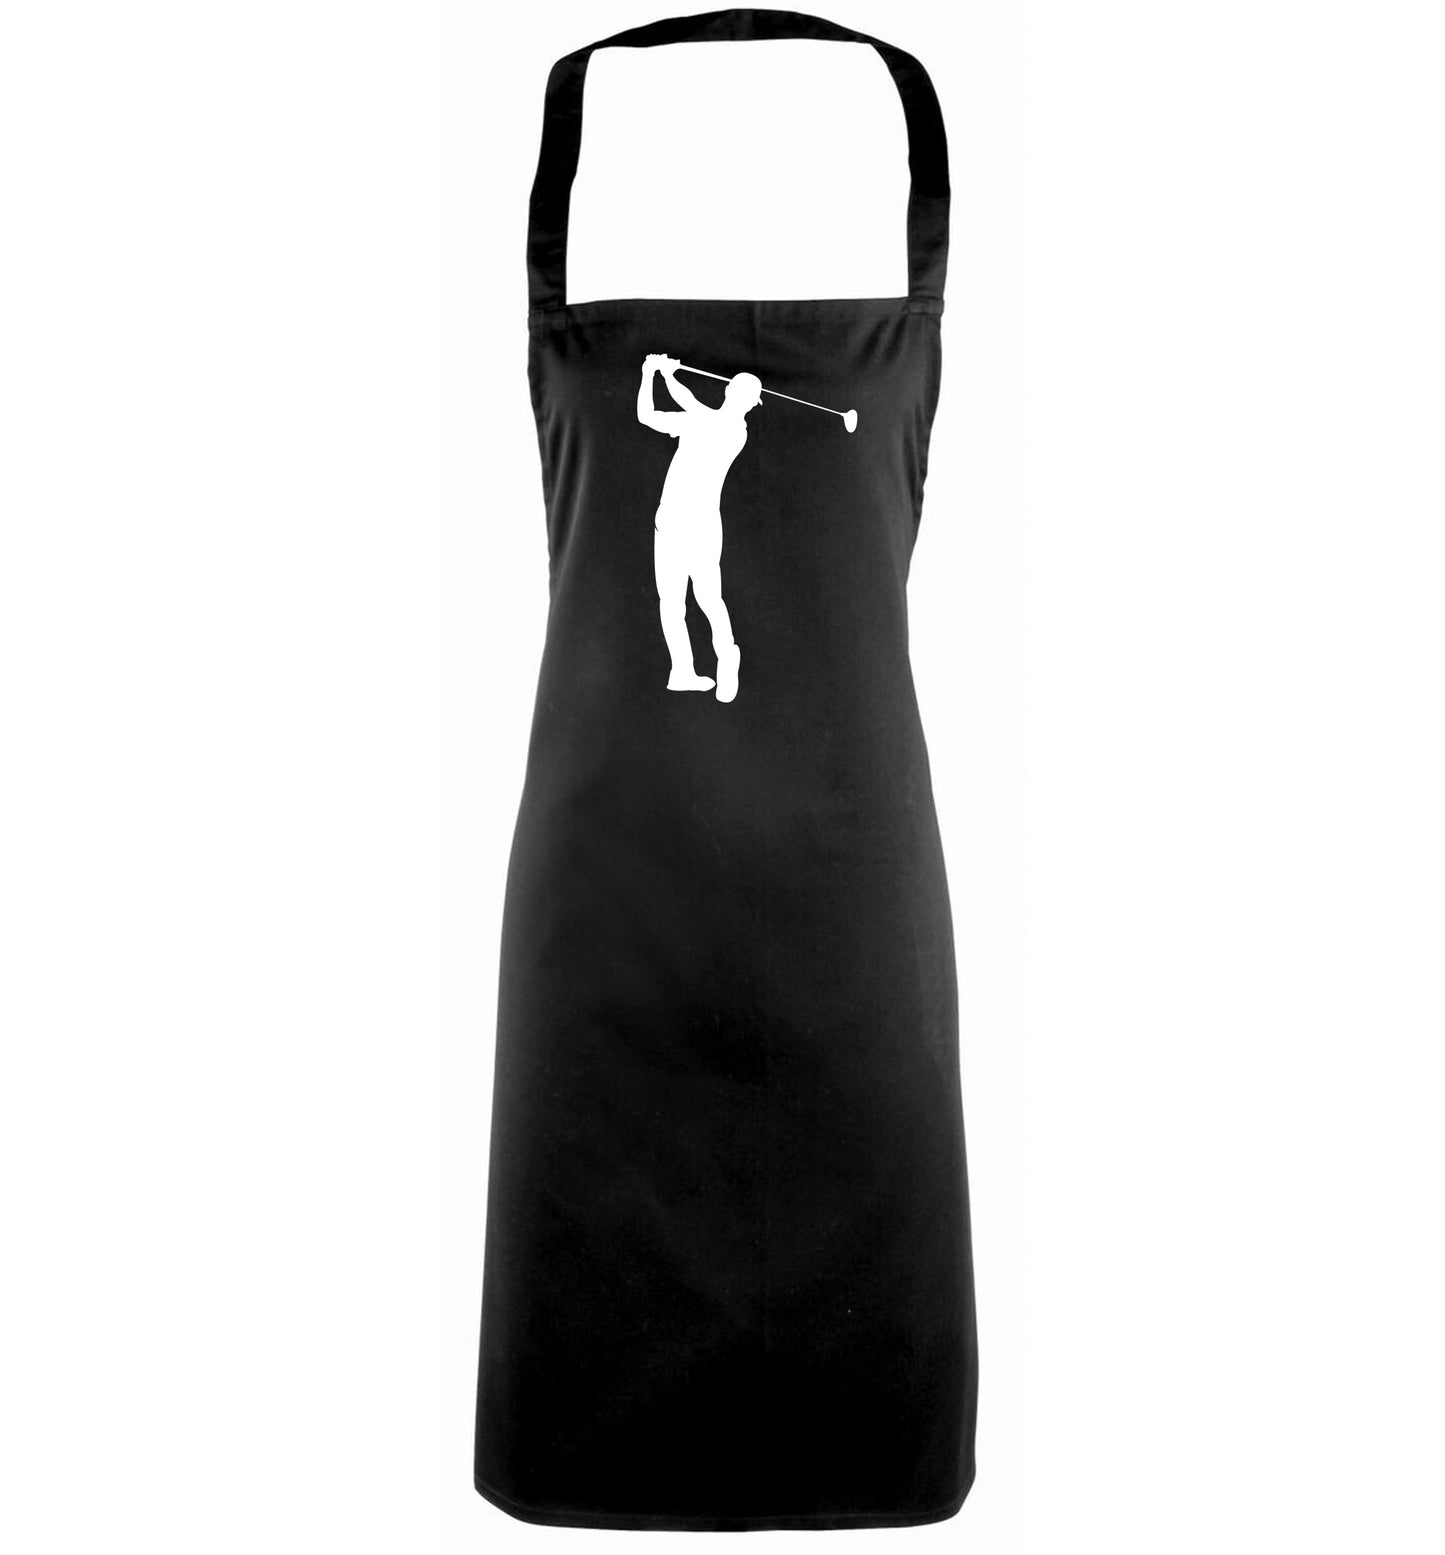 Golfer Illustration black apron